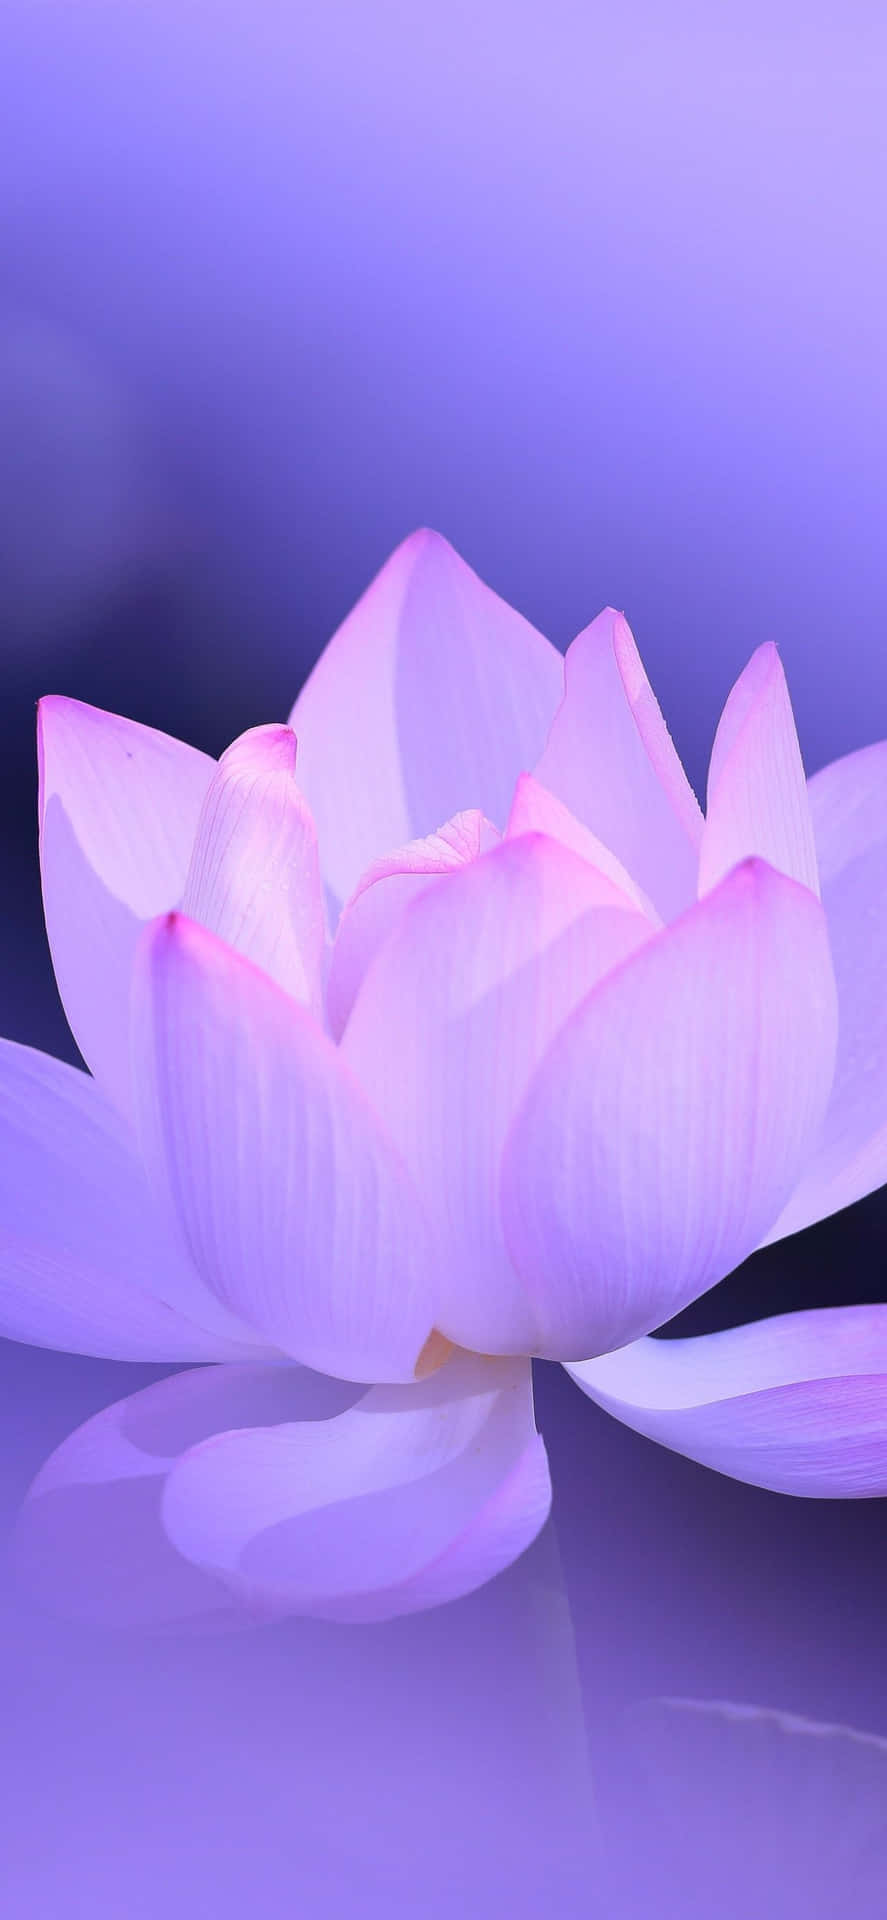 Admiring the Zen beauty of a pink Lotus flower